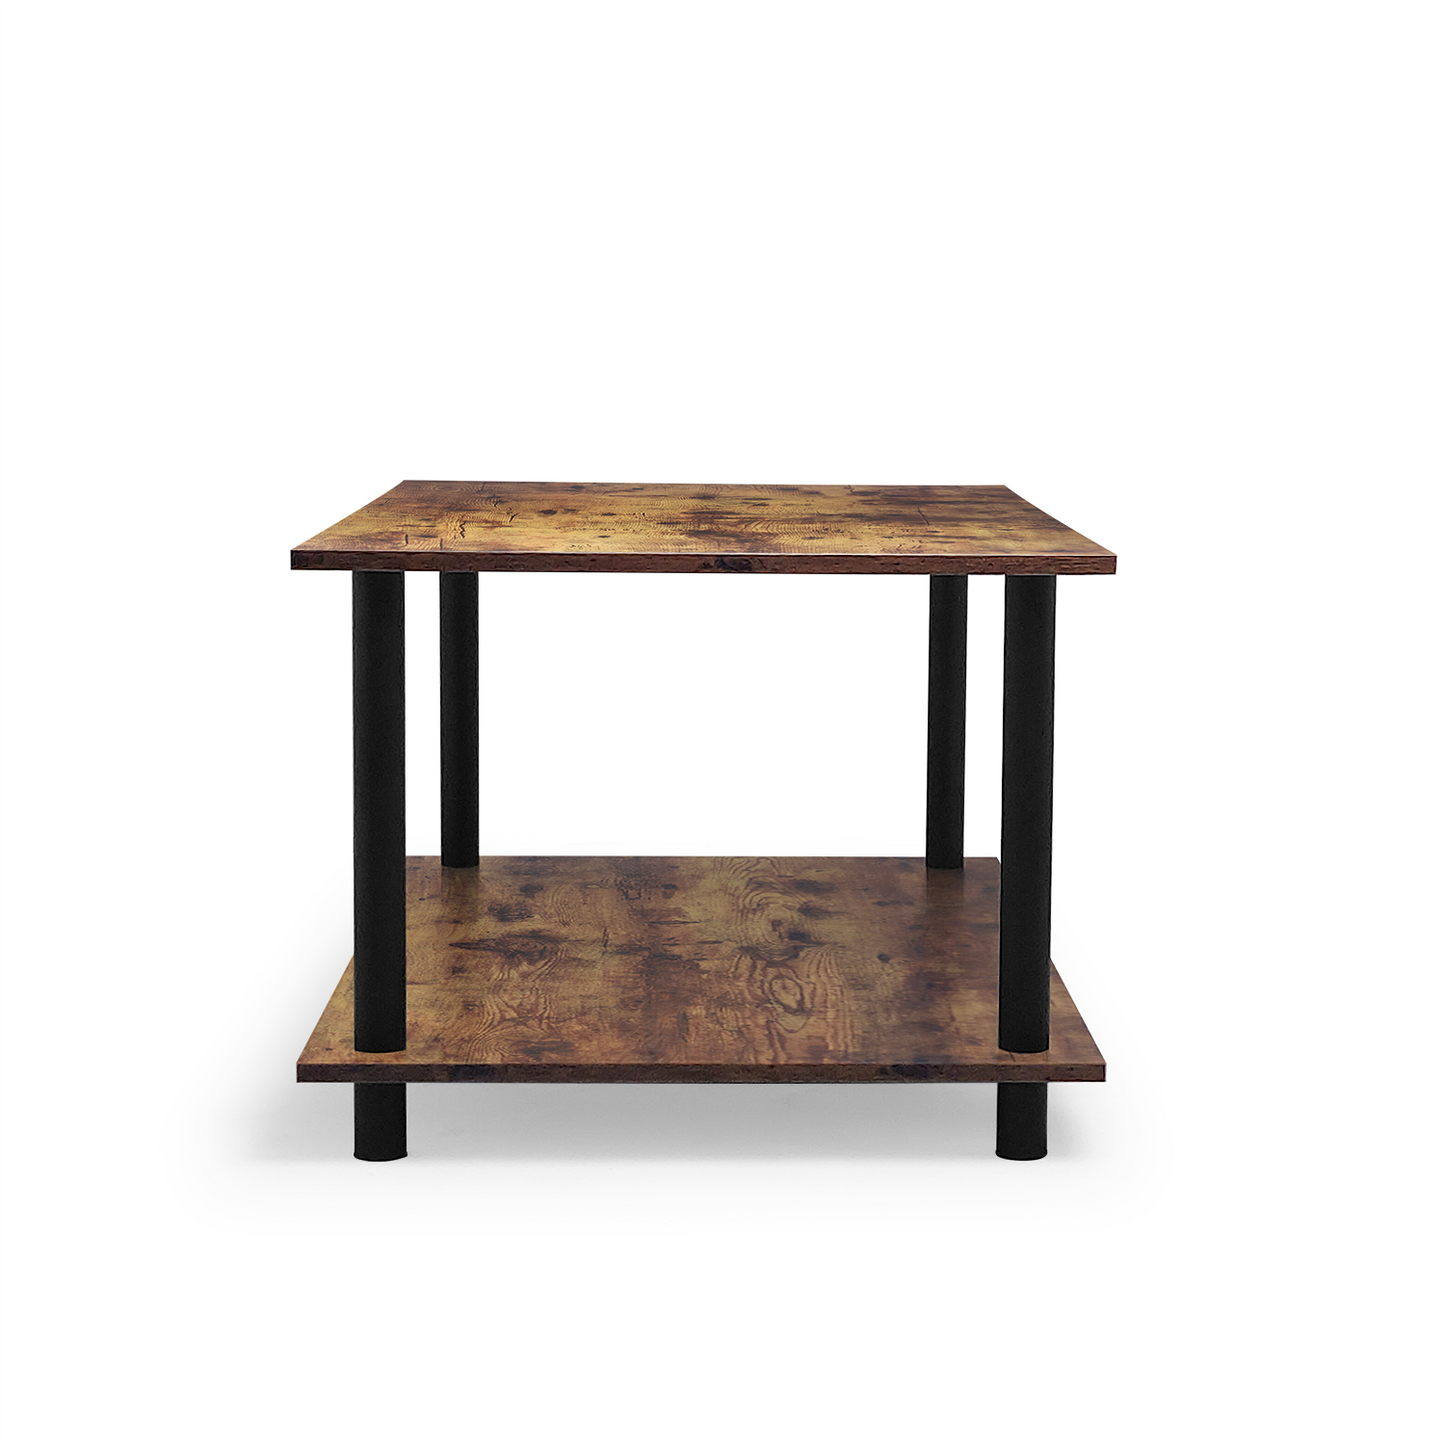 Retro-minimalist Rectangle Coffee Table, Brown, 35.4"x21.7"x18.0"